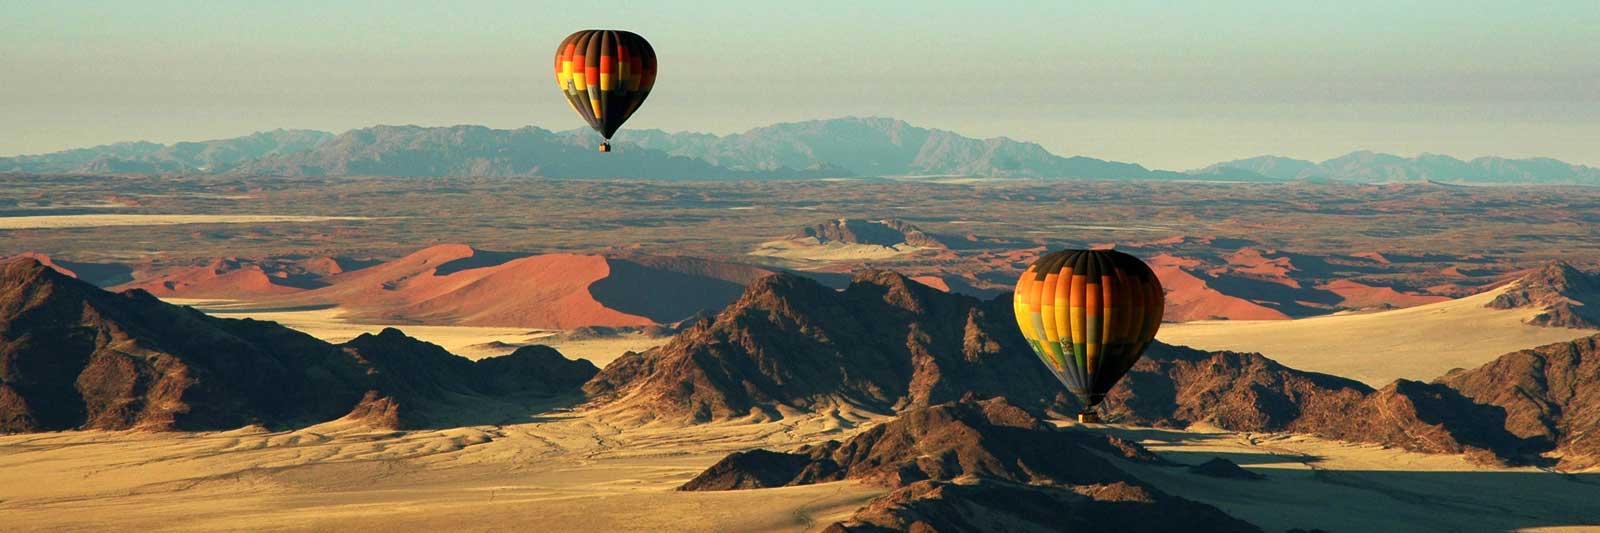 Sky Balloon Safaris, Namib Desert